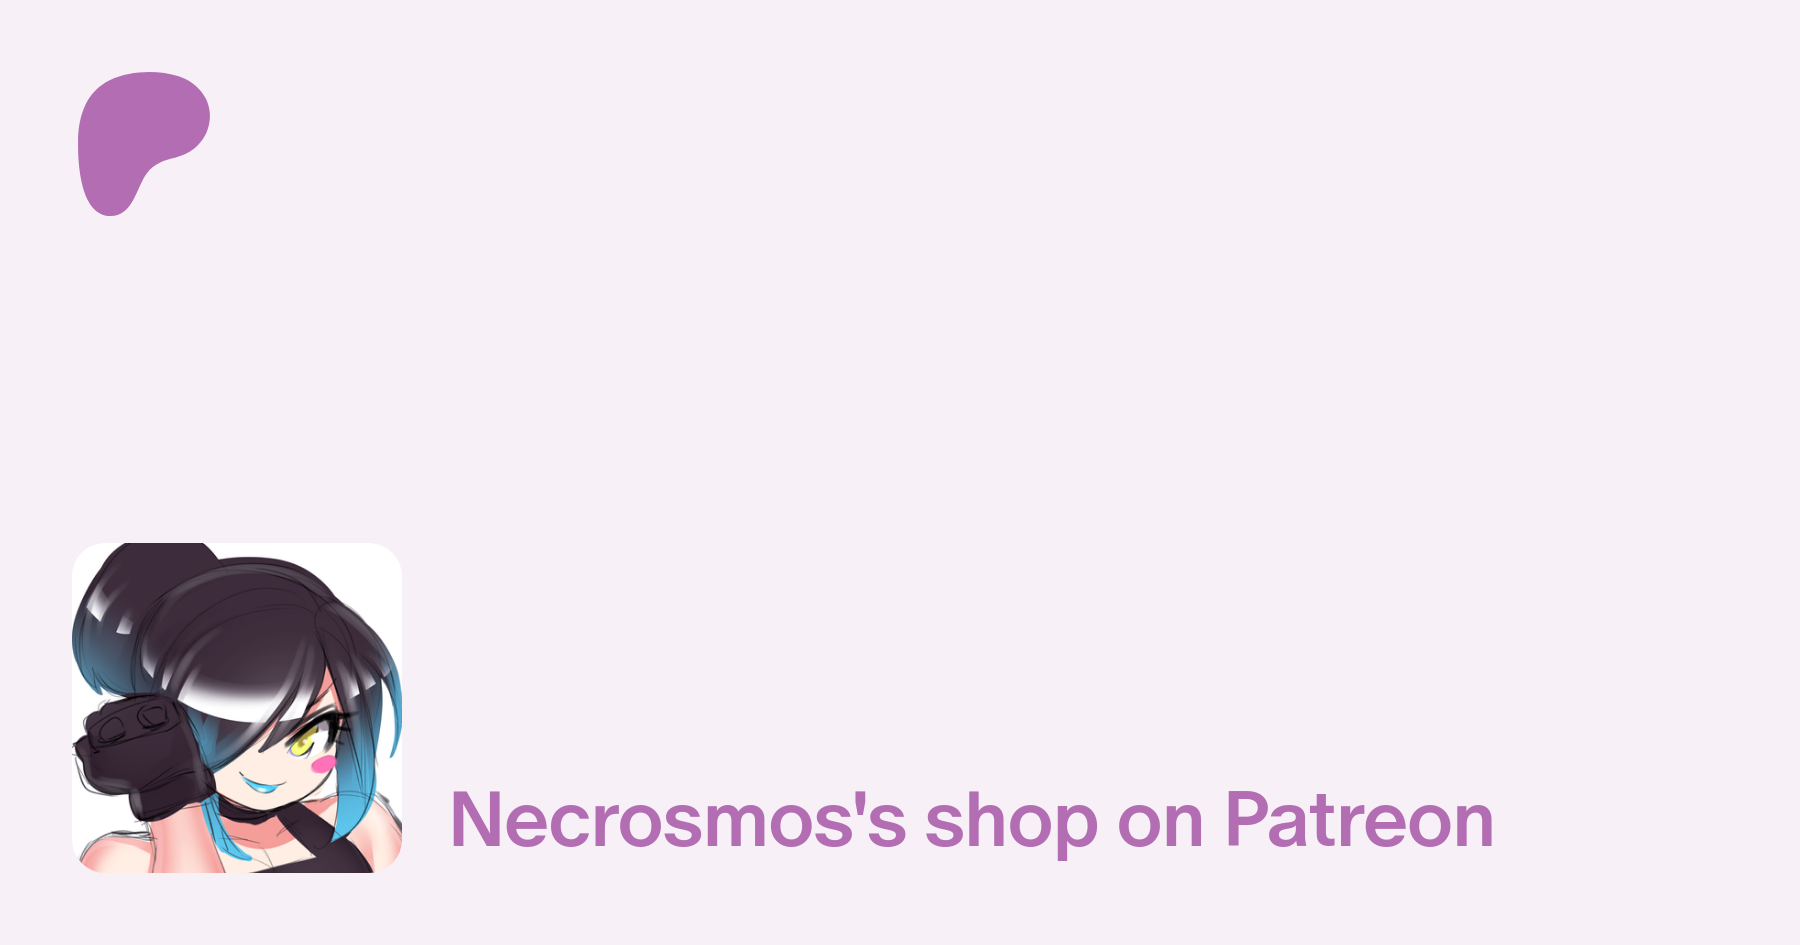 Necrosmos | creating soft round things | Patreon